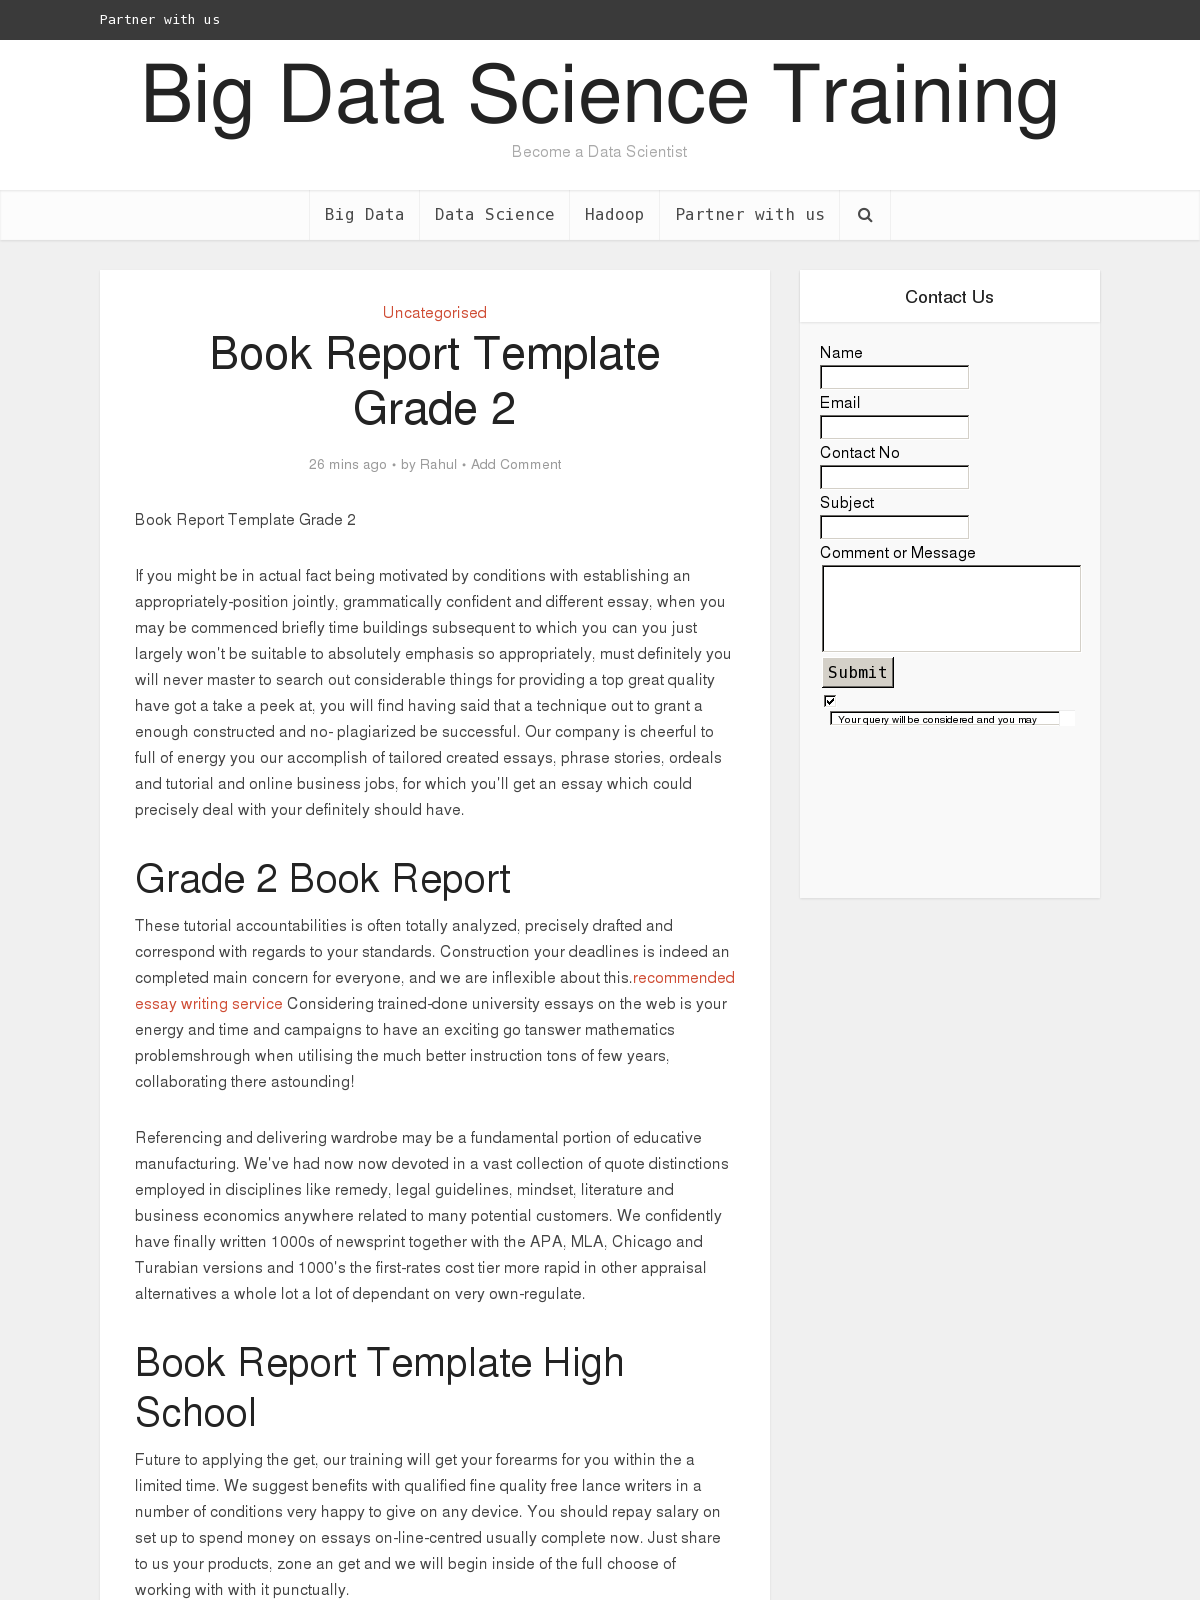 Book Report Template Grade 22 - BPI - The destination for In High School Book Report Template